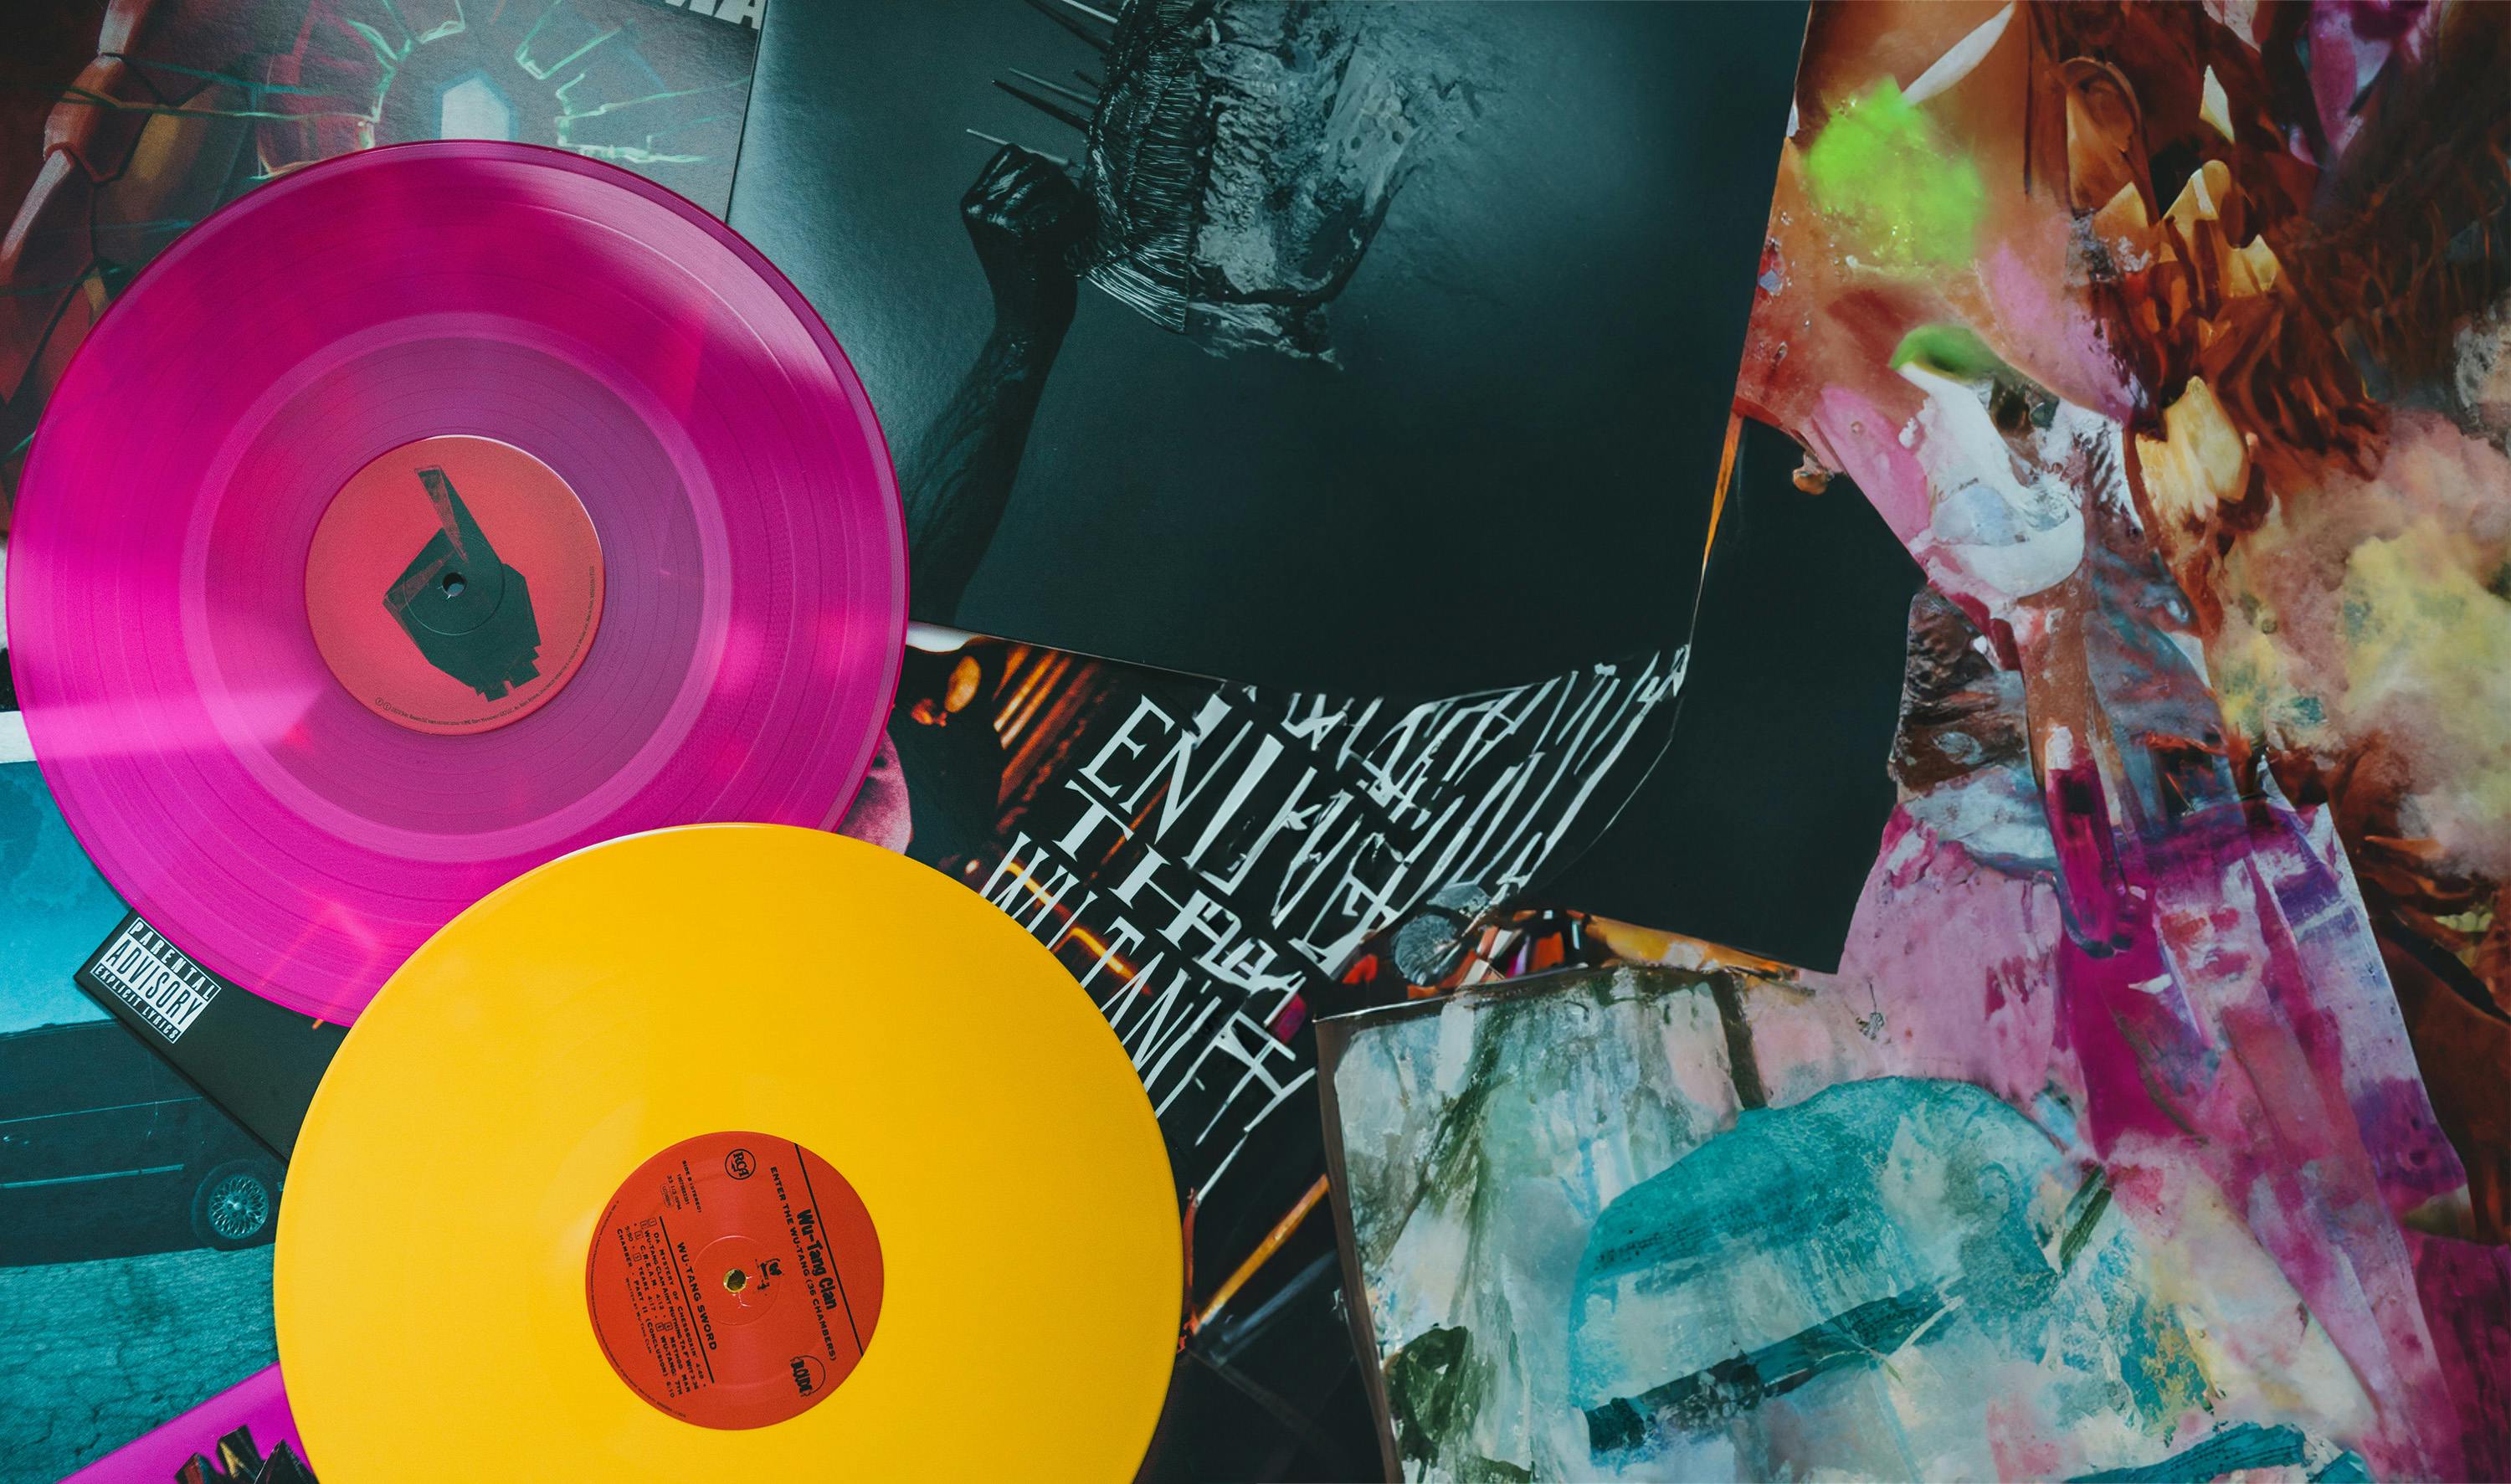 Two vinyl discs on a messy creative desk